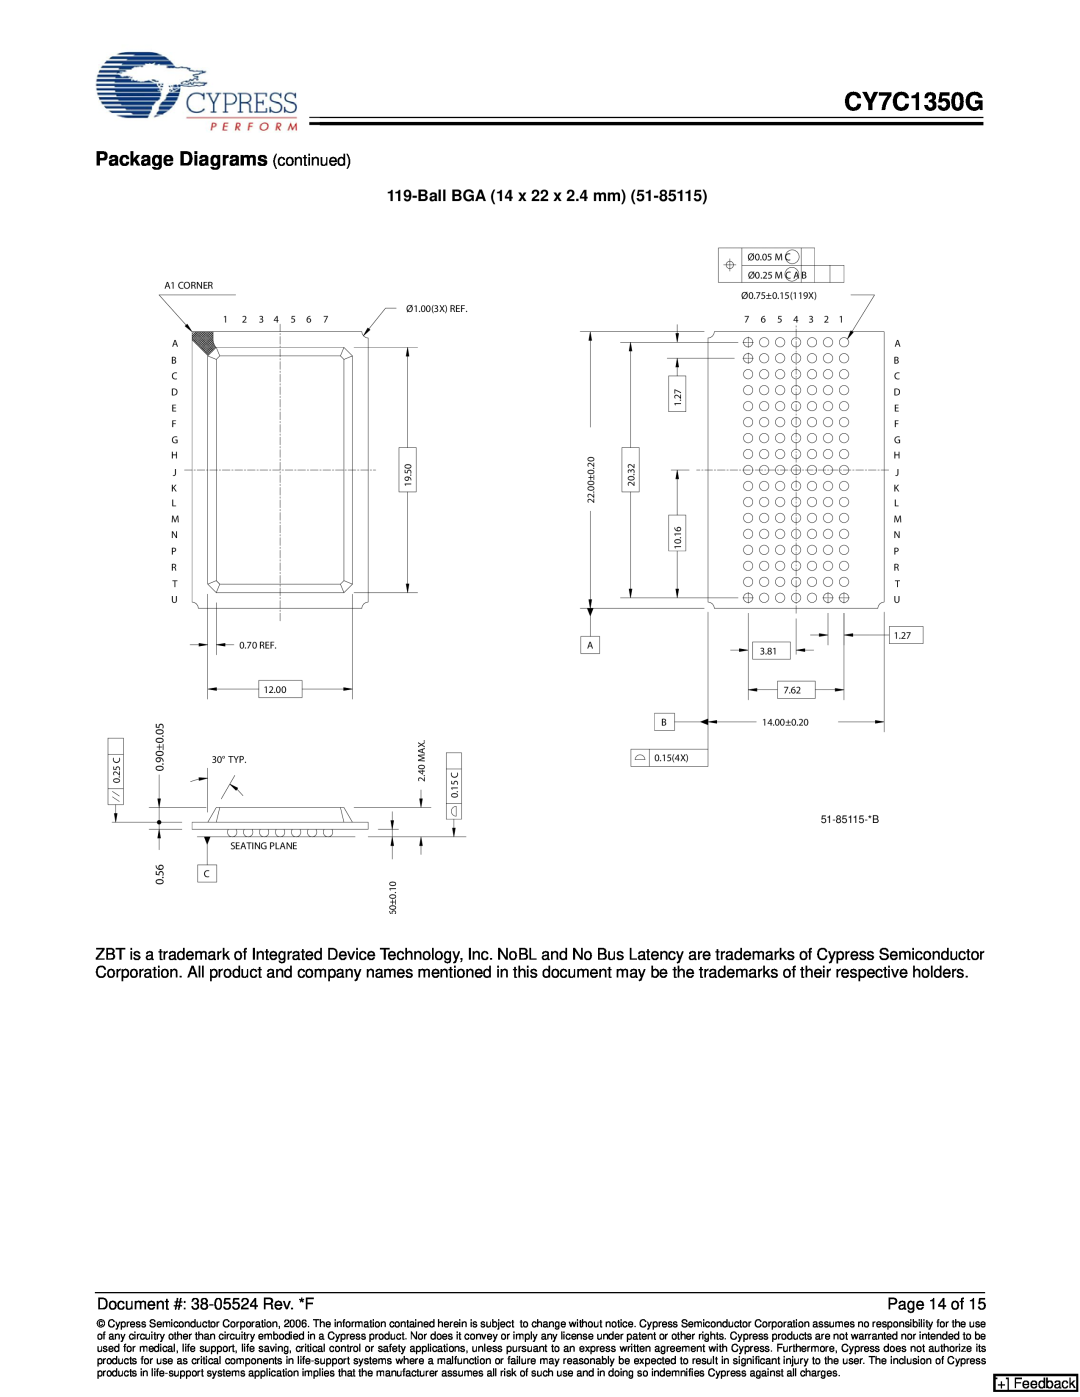 Cypress CY7C1350G manual Package Diagrams continued, Ball BGA 14 x 22 x 2.4 mm, + Feedback 